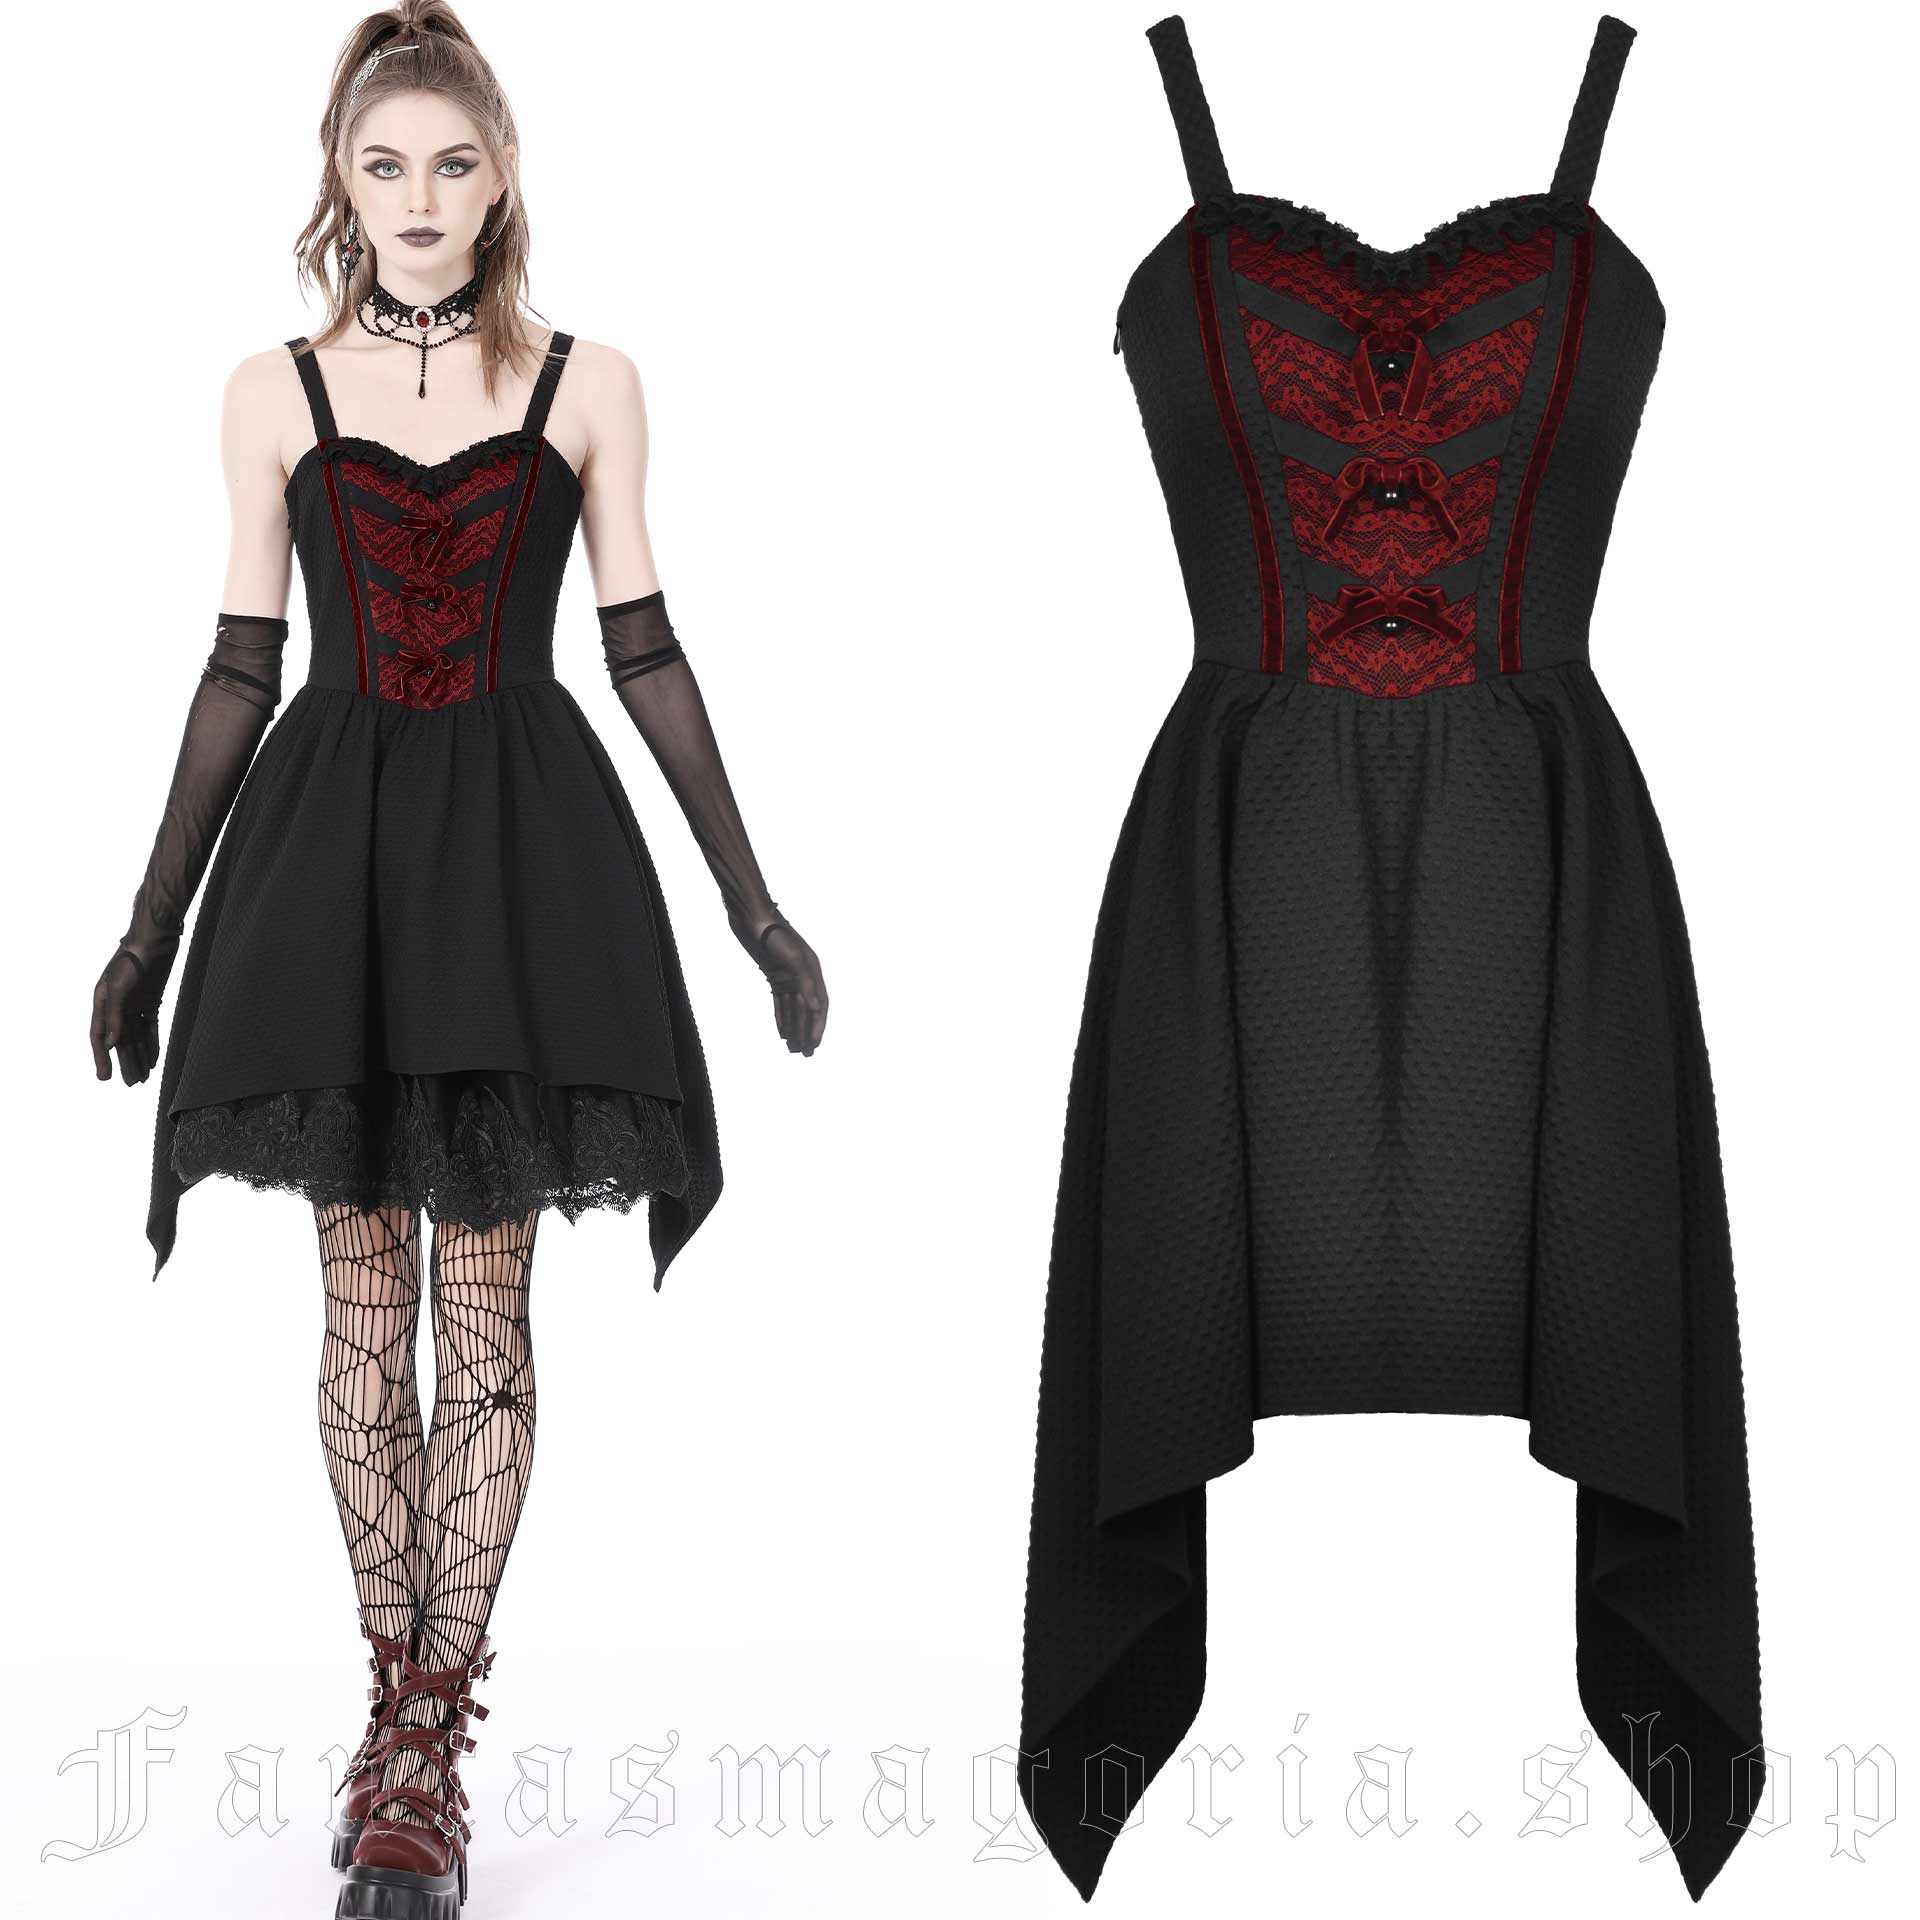 Romantic Gothic sweetheart neckline dress.